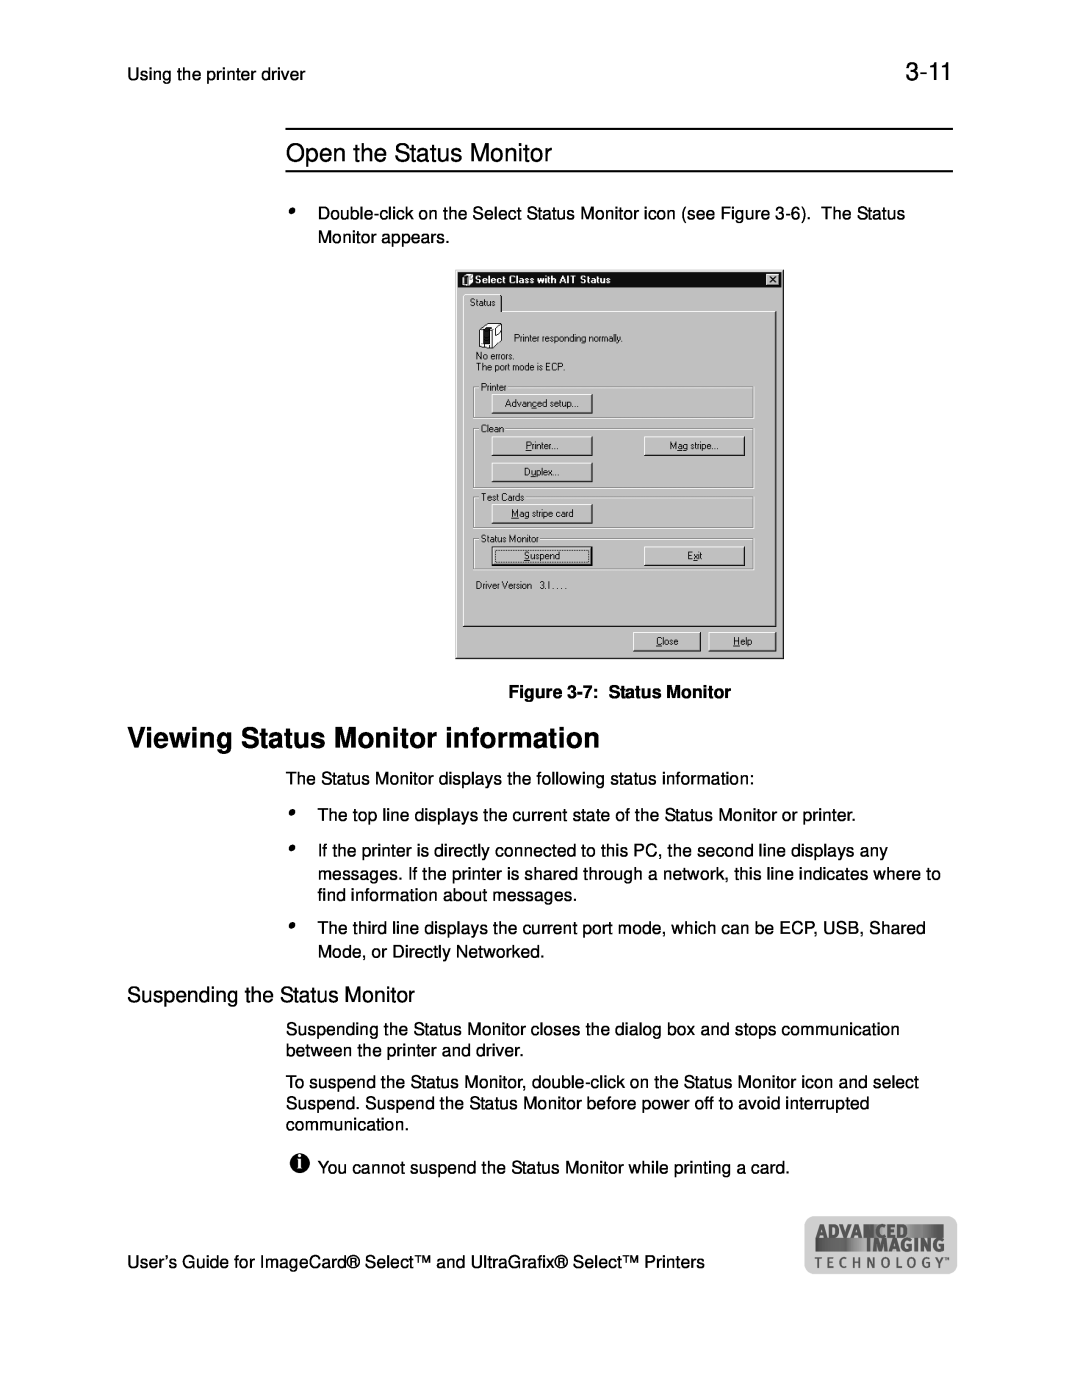 Datacard Group ImageCard SelectTM and UltraGrafix SelectTM Printers manual Viewing Status Monitor information, 3-11 